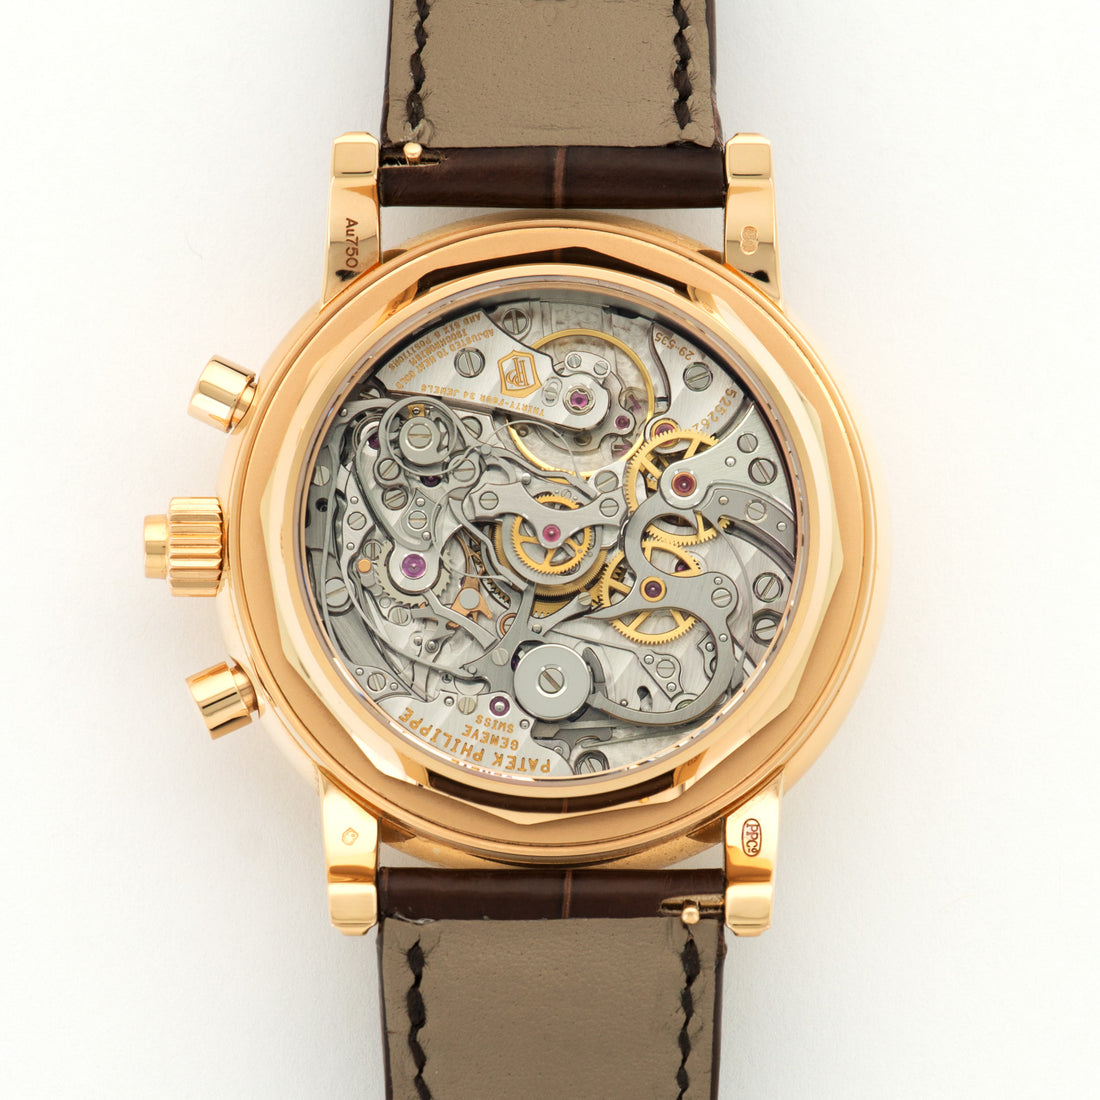 Patek Philippe Rose Gold Perpetual Chronograph Split Seconds Watch Ref. 5204